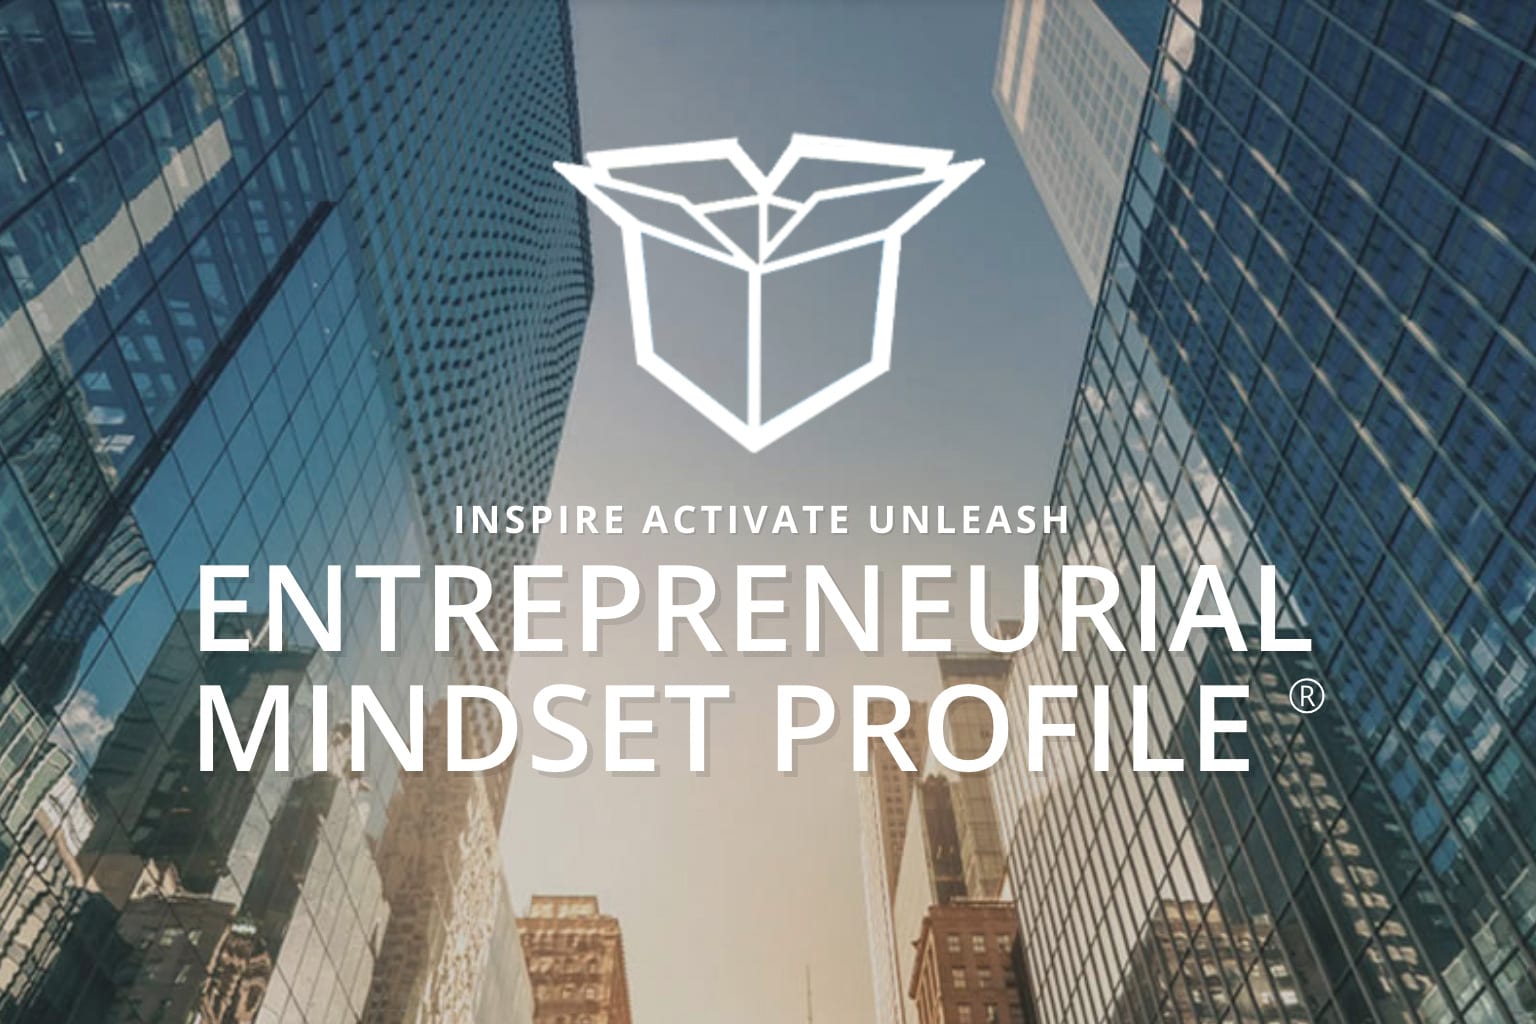 Entrepreneurial Mindset Profile floats above city buildings